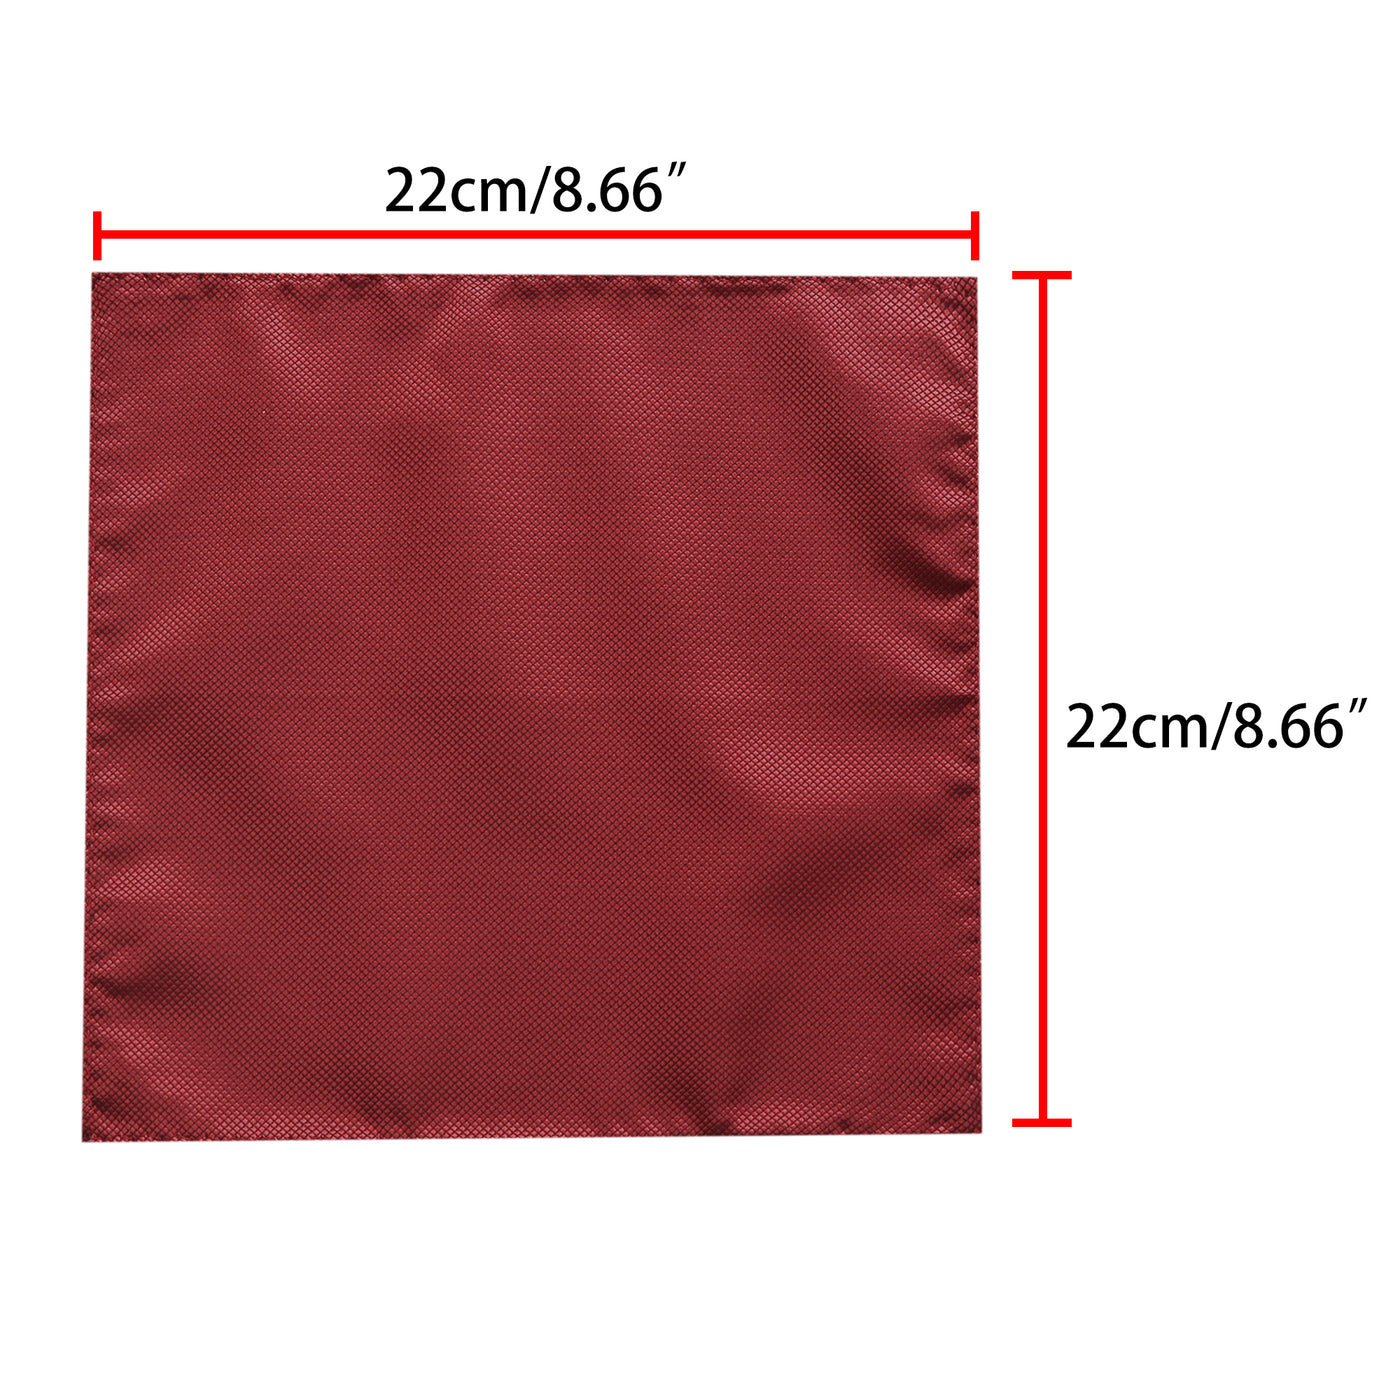 Allegra K Pocket Square Solid Classic Textured Wedding Business Handkerchiefs